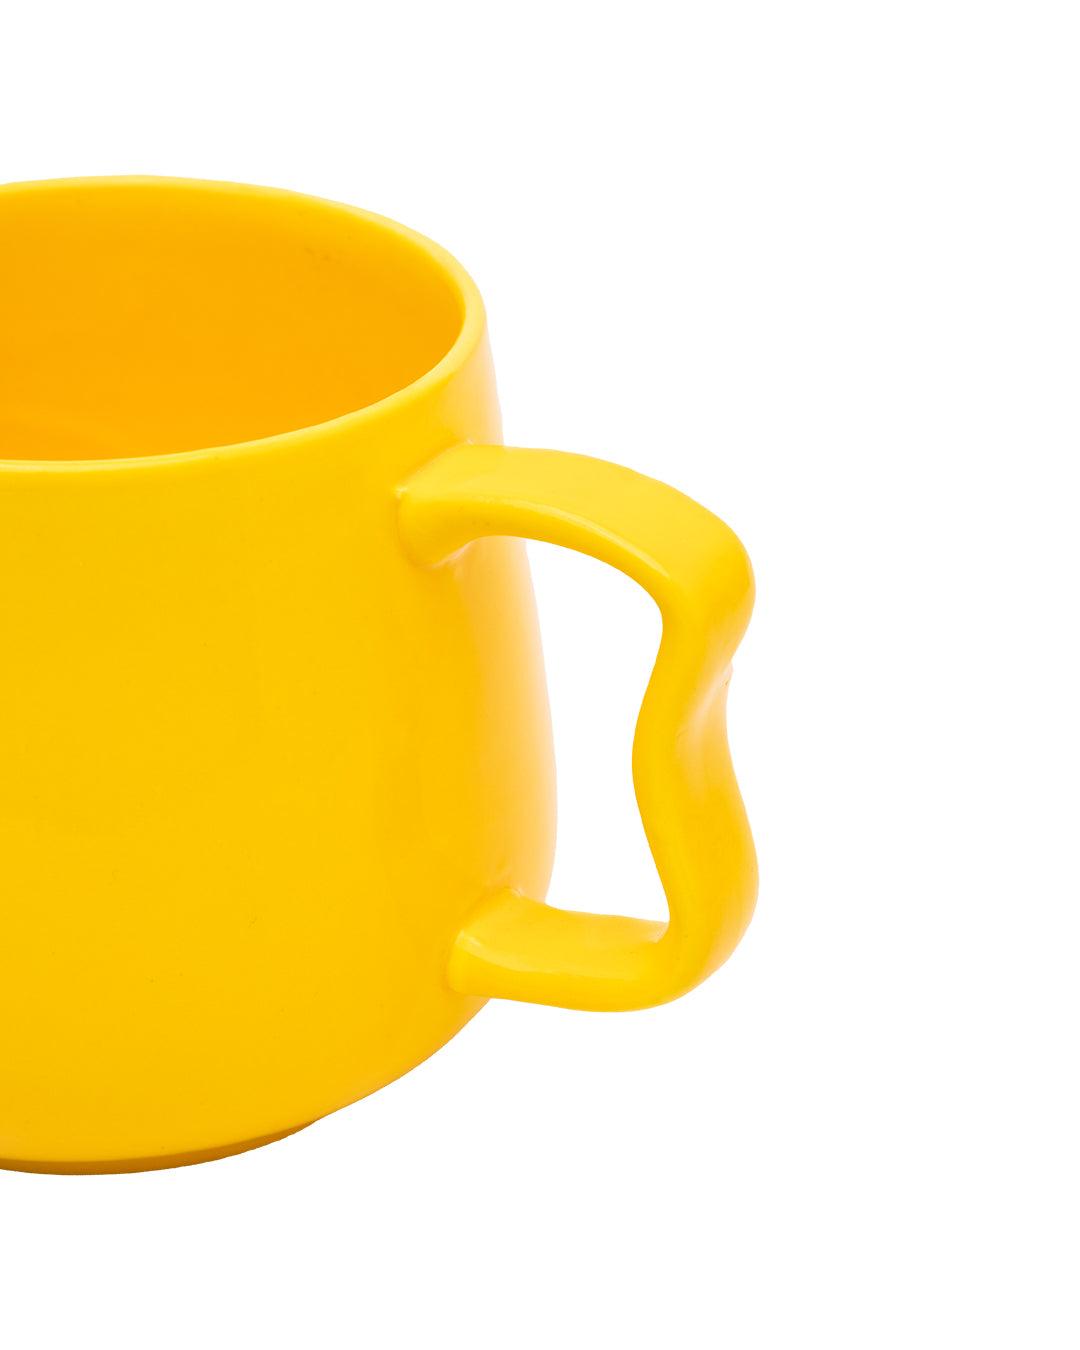 Mug, Emoji Print, Yellow, Plastic, 500 mL - MARKET 99